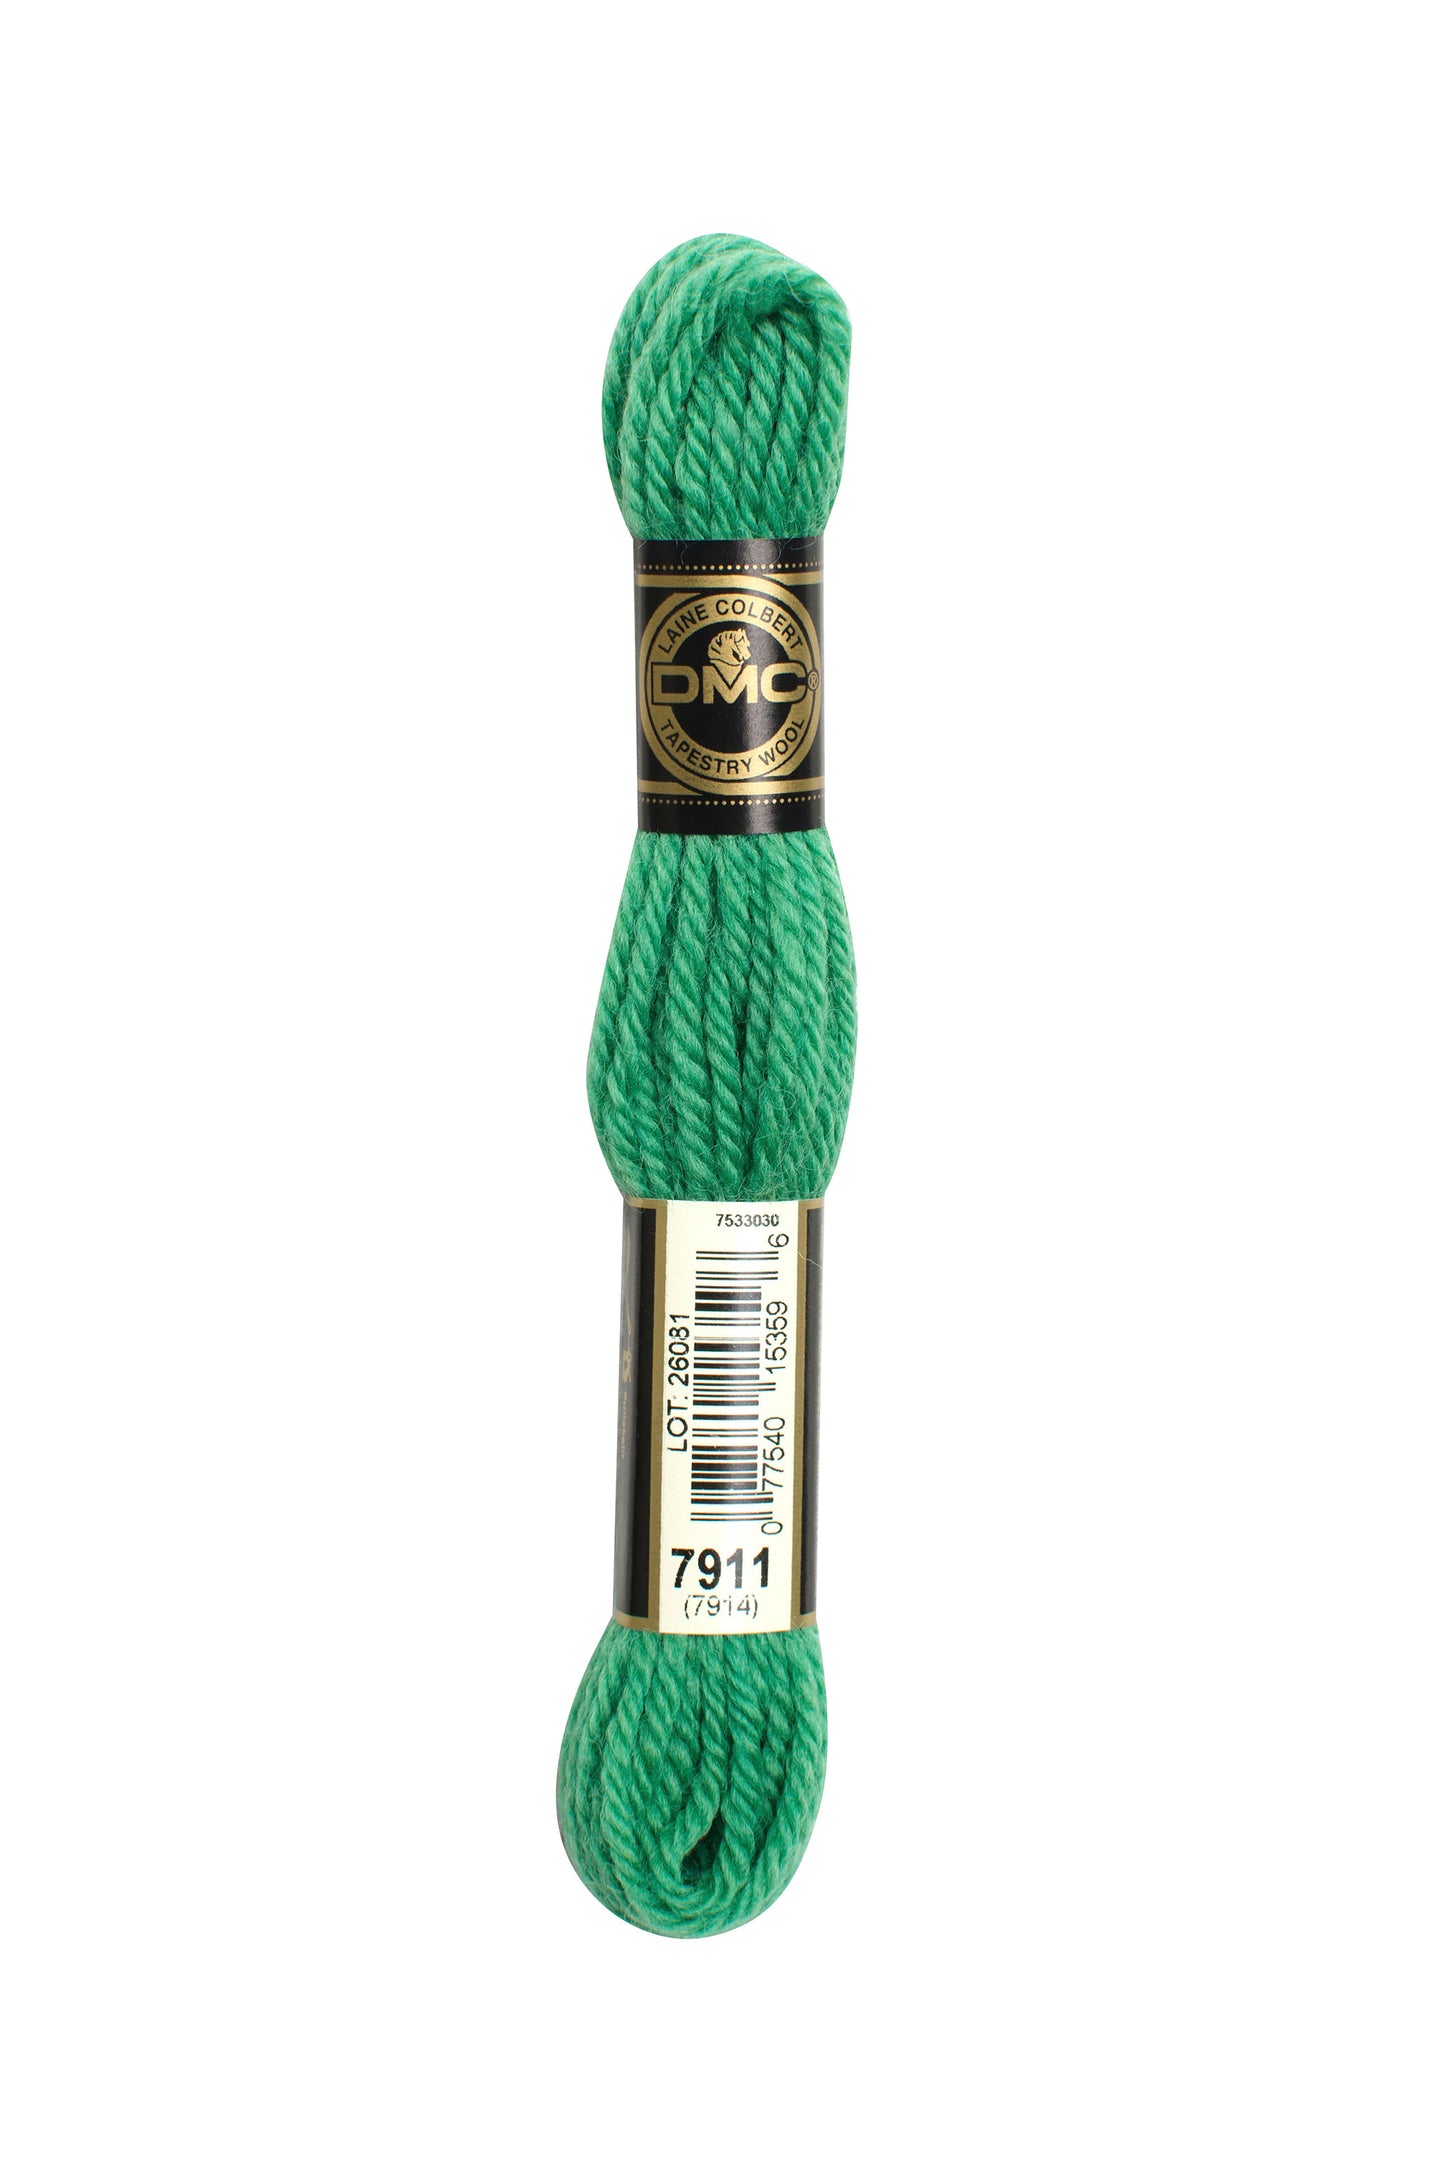 7911 – DMC Tapestry Wool